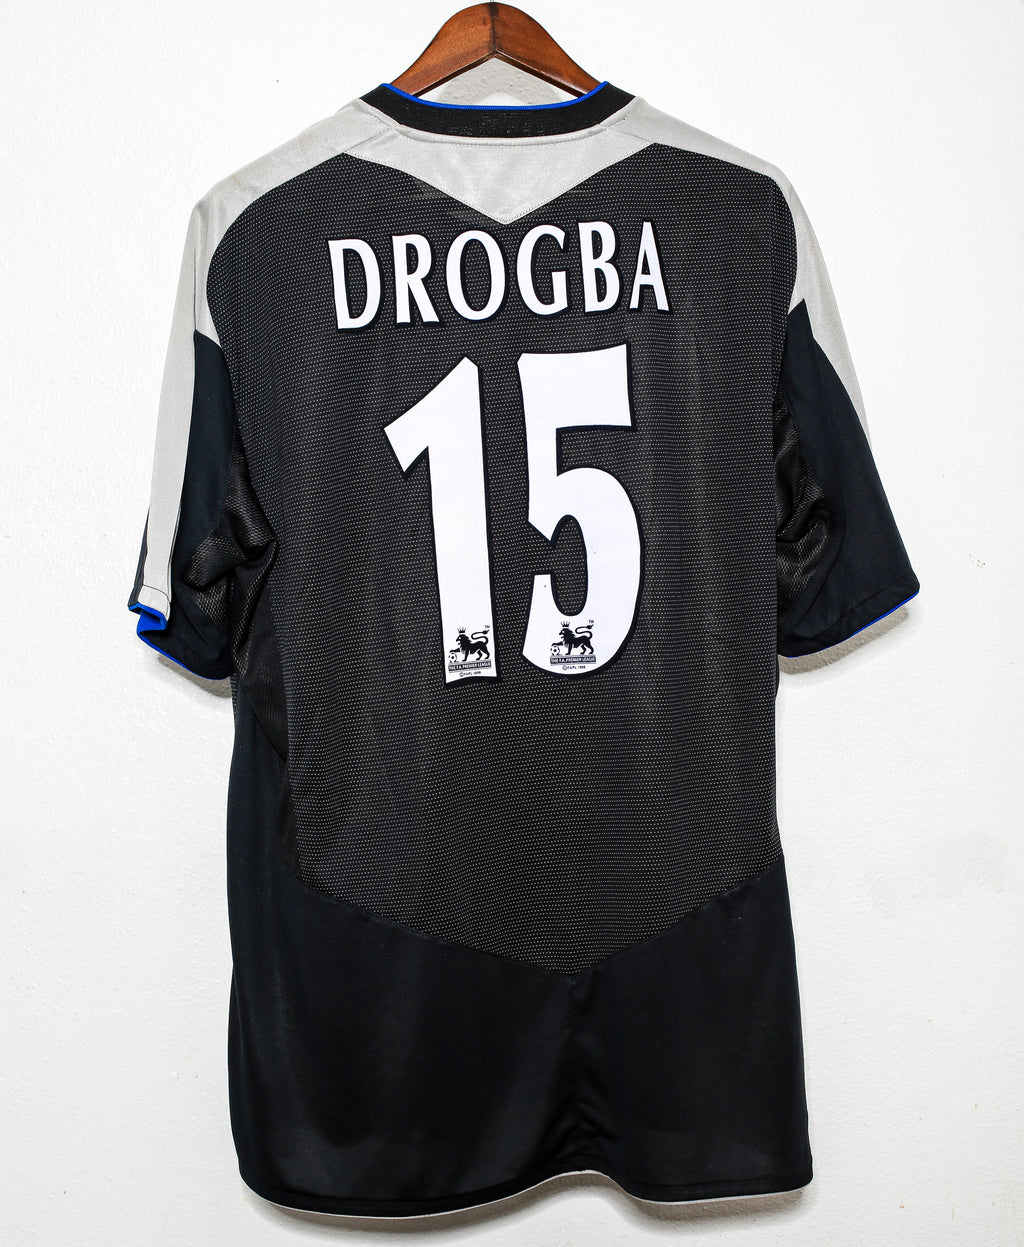 drogba champions league jersey